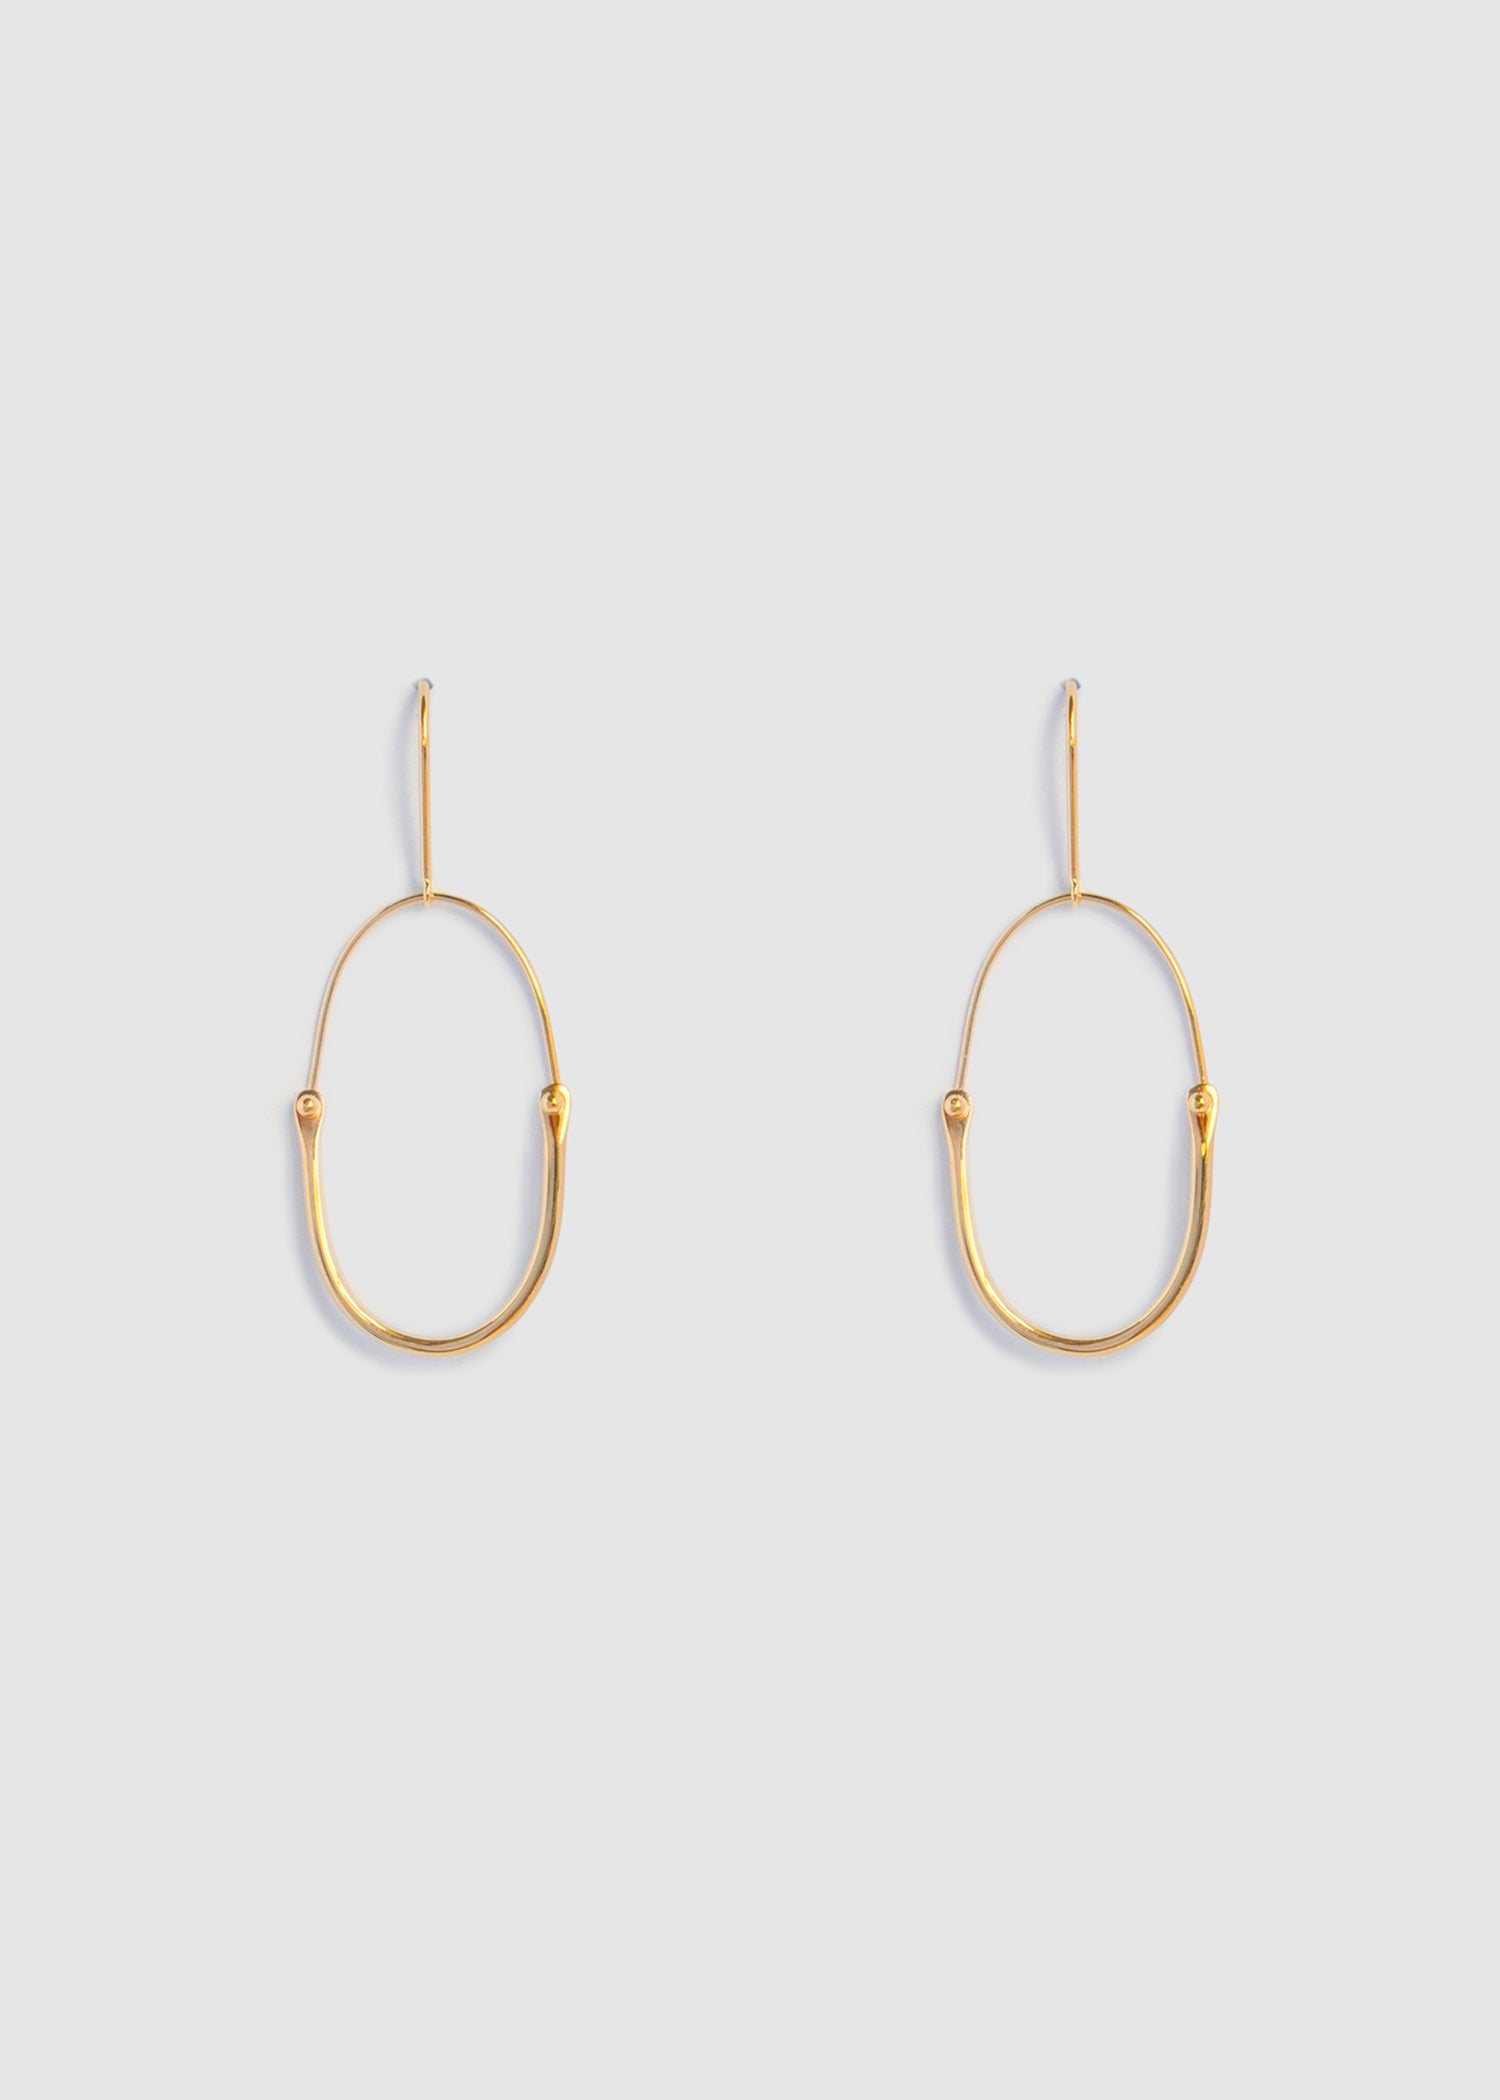 In Stock | Medium Kishi Earrings